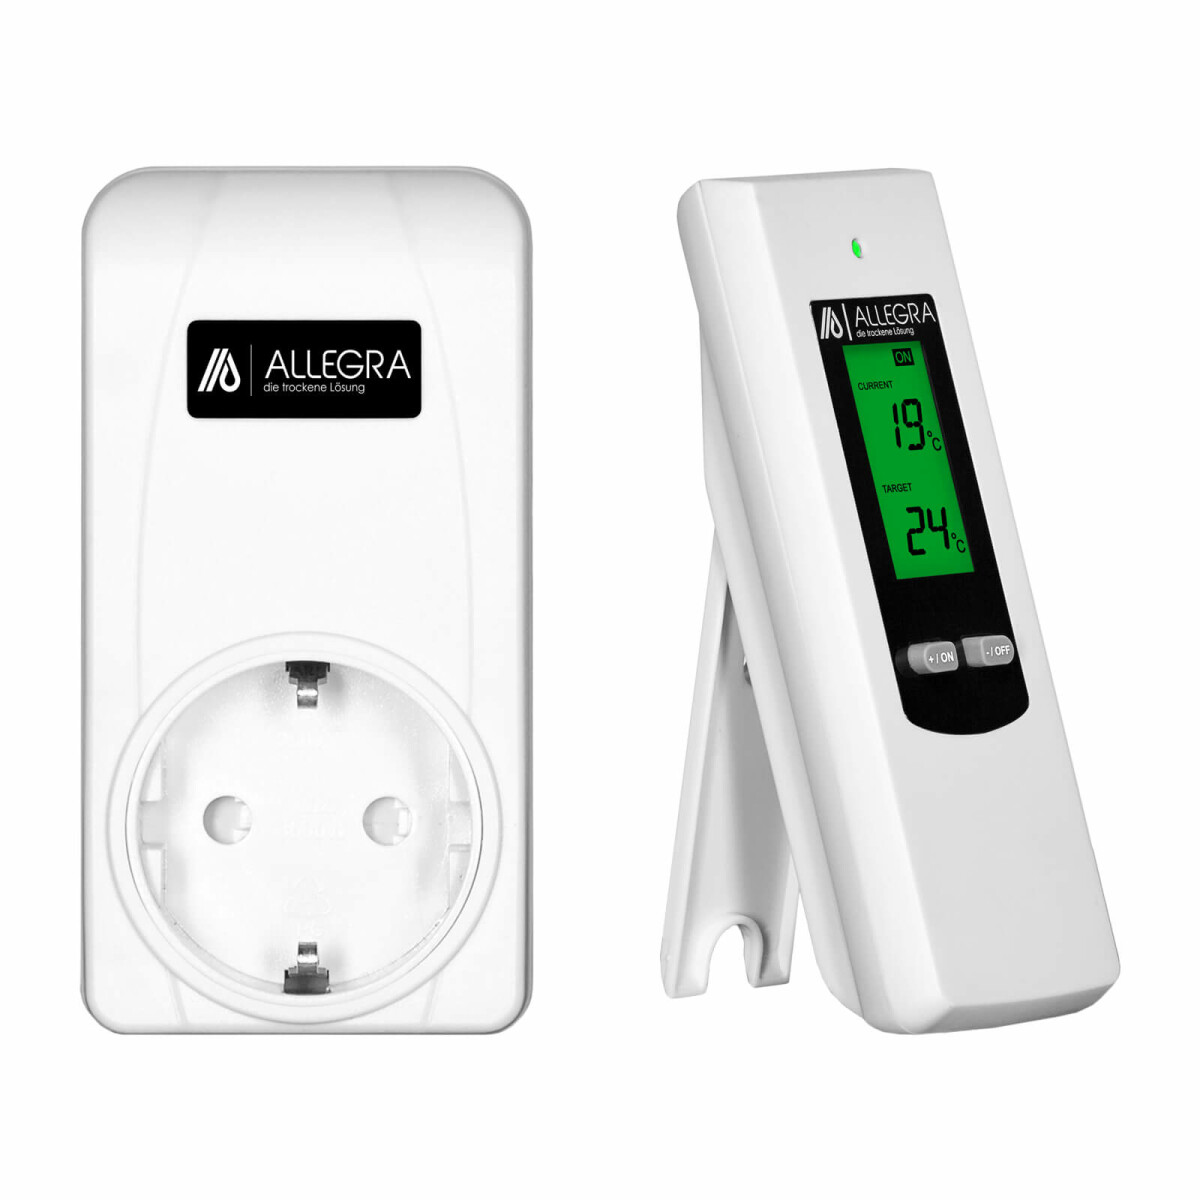 Allegra Hygrostat Stecksdose Steckdosenhygrostat Feuchteregler Hygrometer  Controller Temperaturregler Luftentfeuchter Luftbefeuchter (H26) :  : Baumarkt